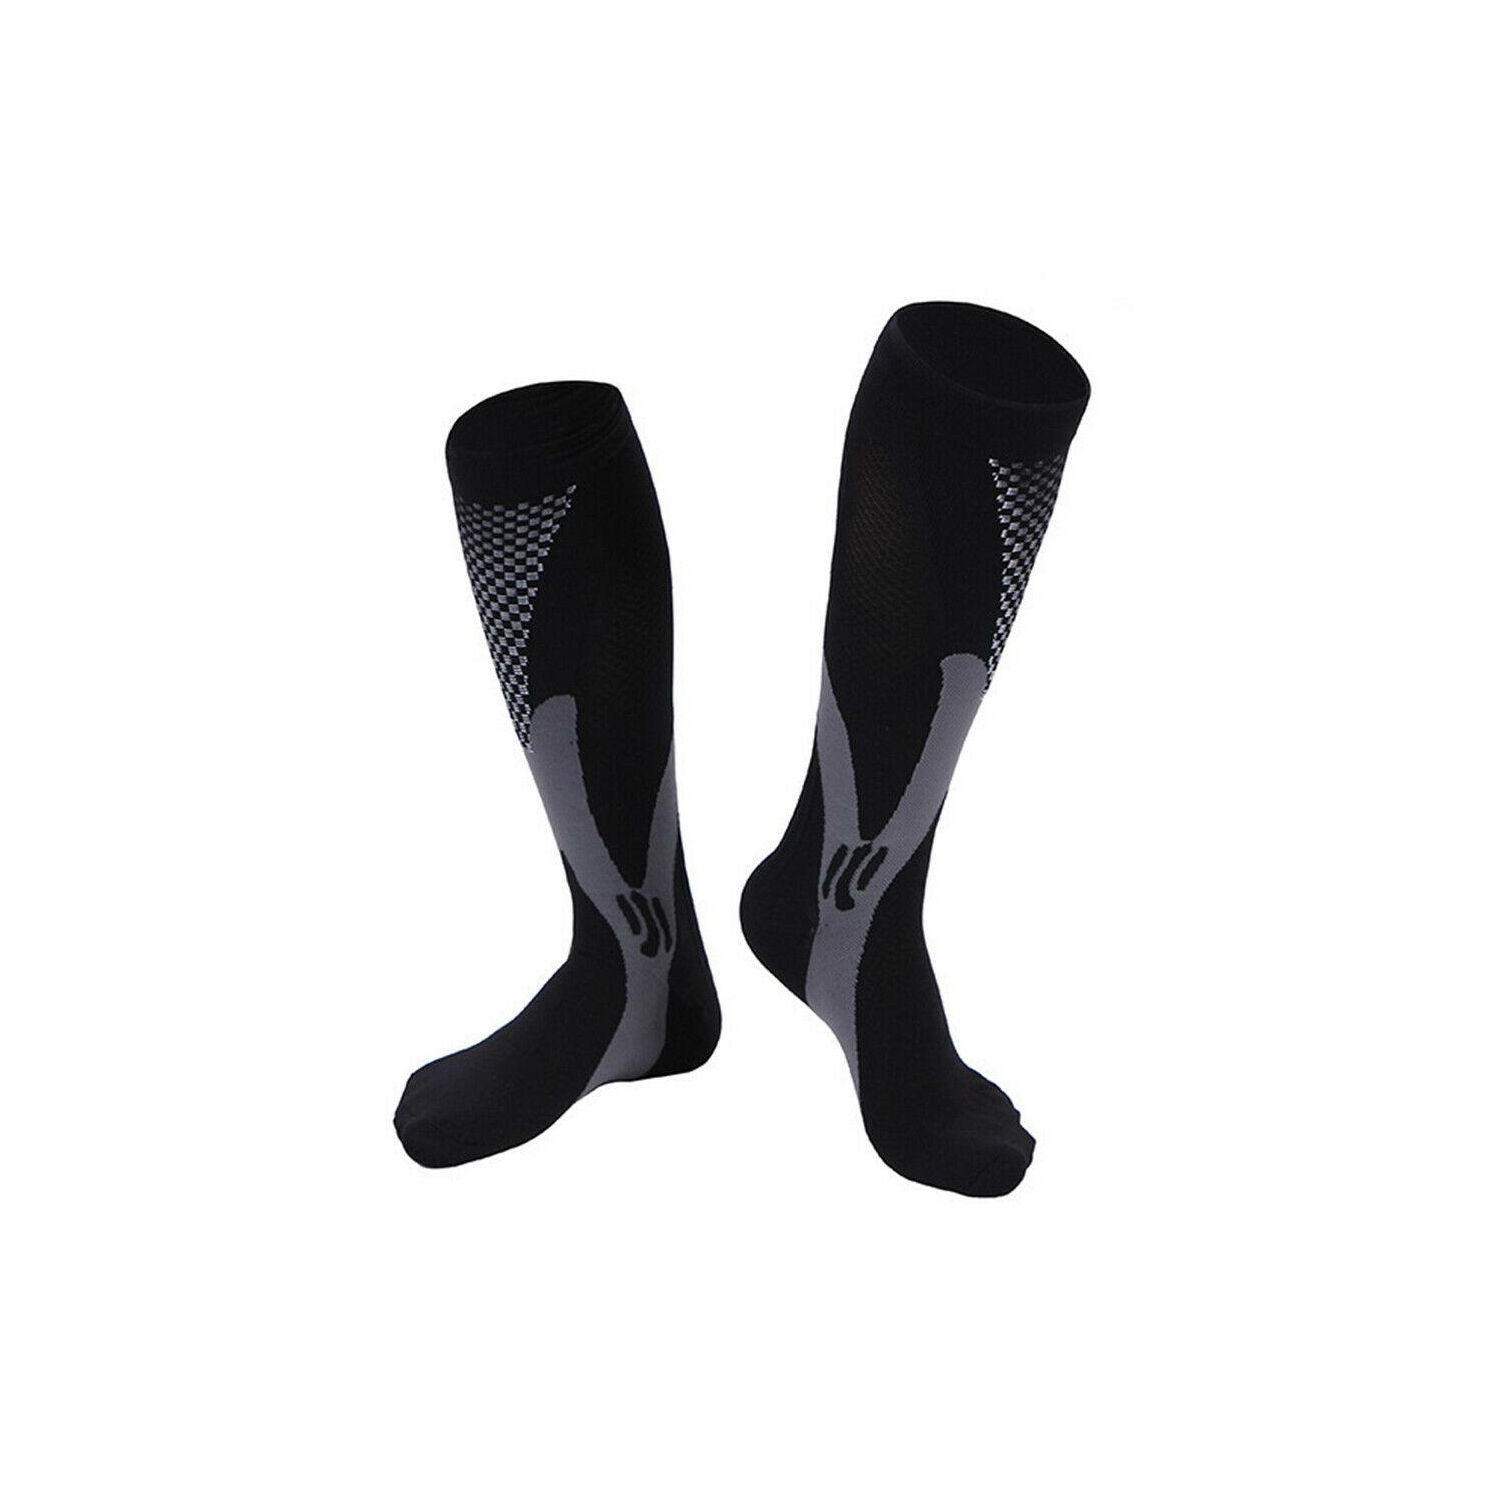 Compression Socks Unisex Sports Cycling Running Football Elastic Stockings